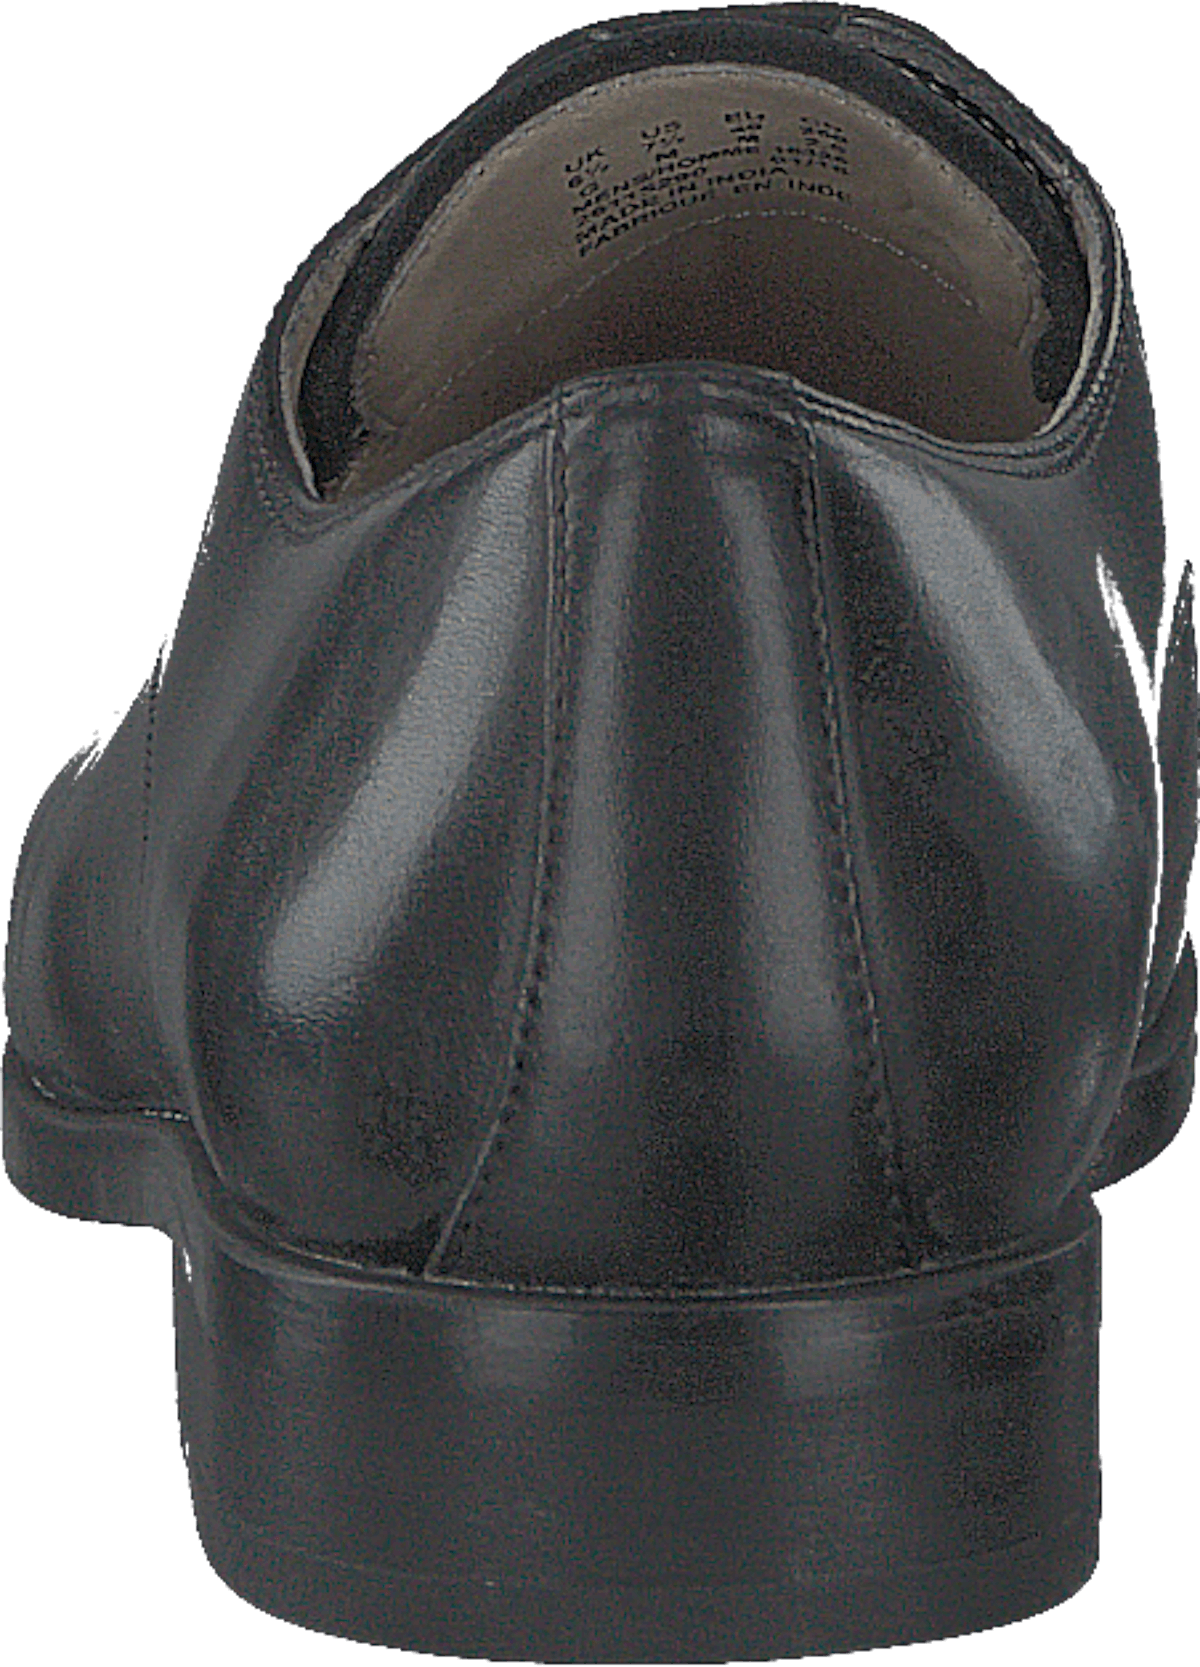 Amieson Walk Black Leather